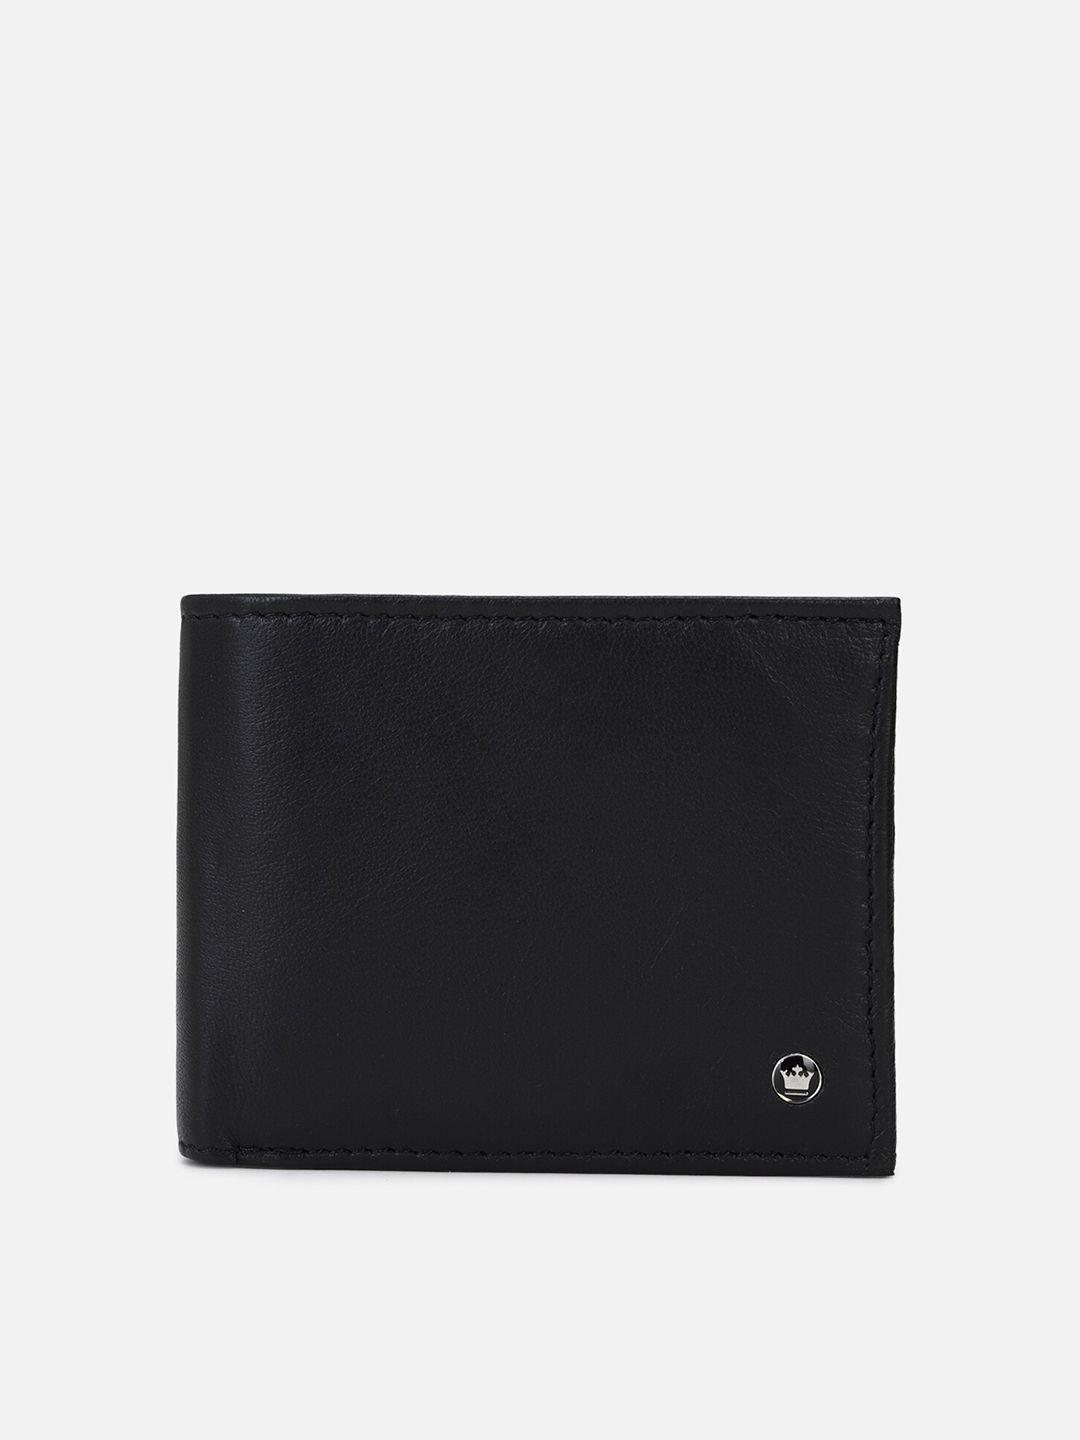 louis philippe men black leather two fold wallet